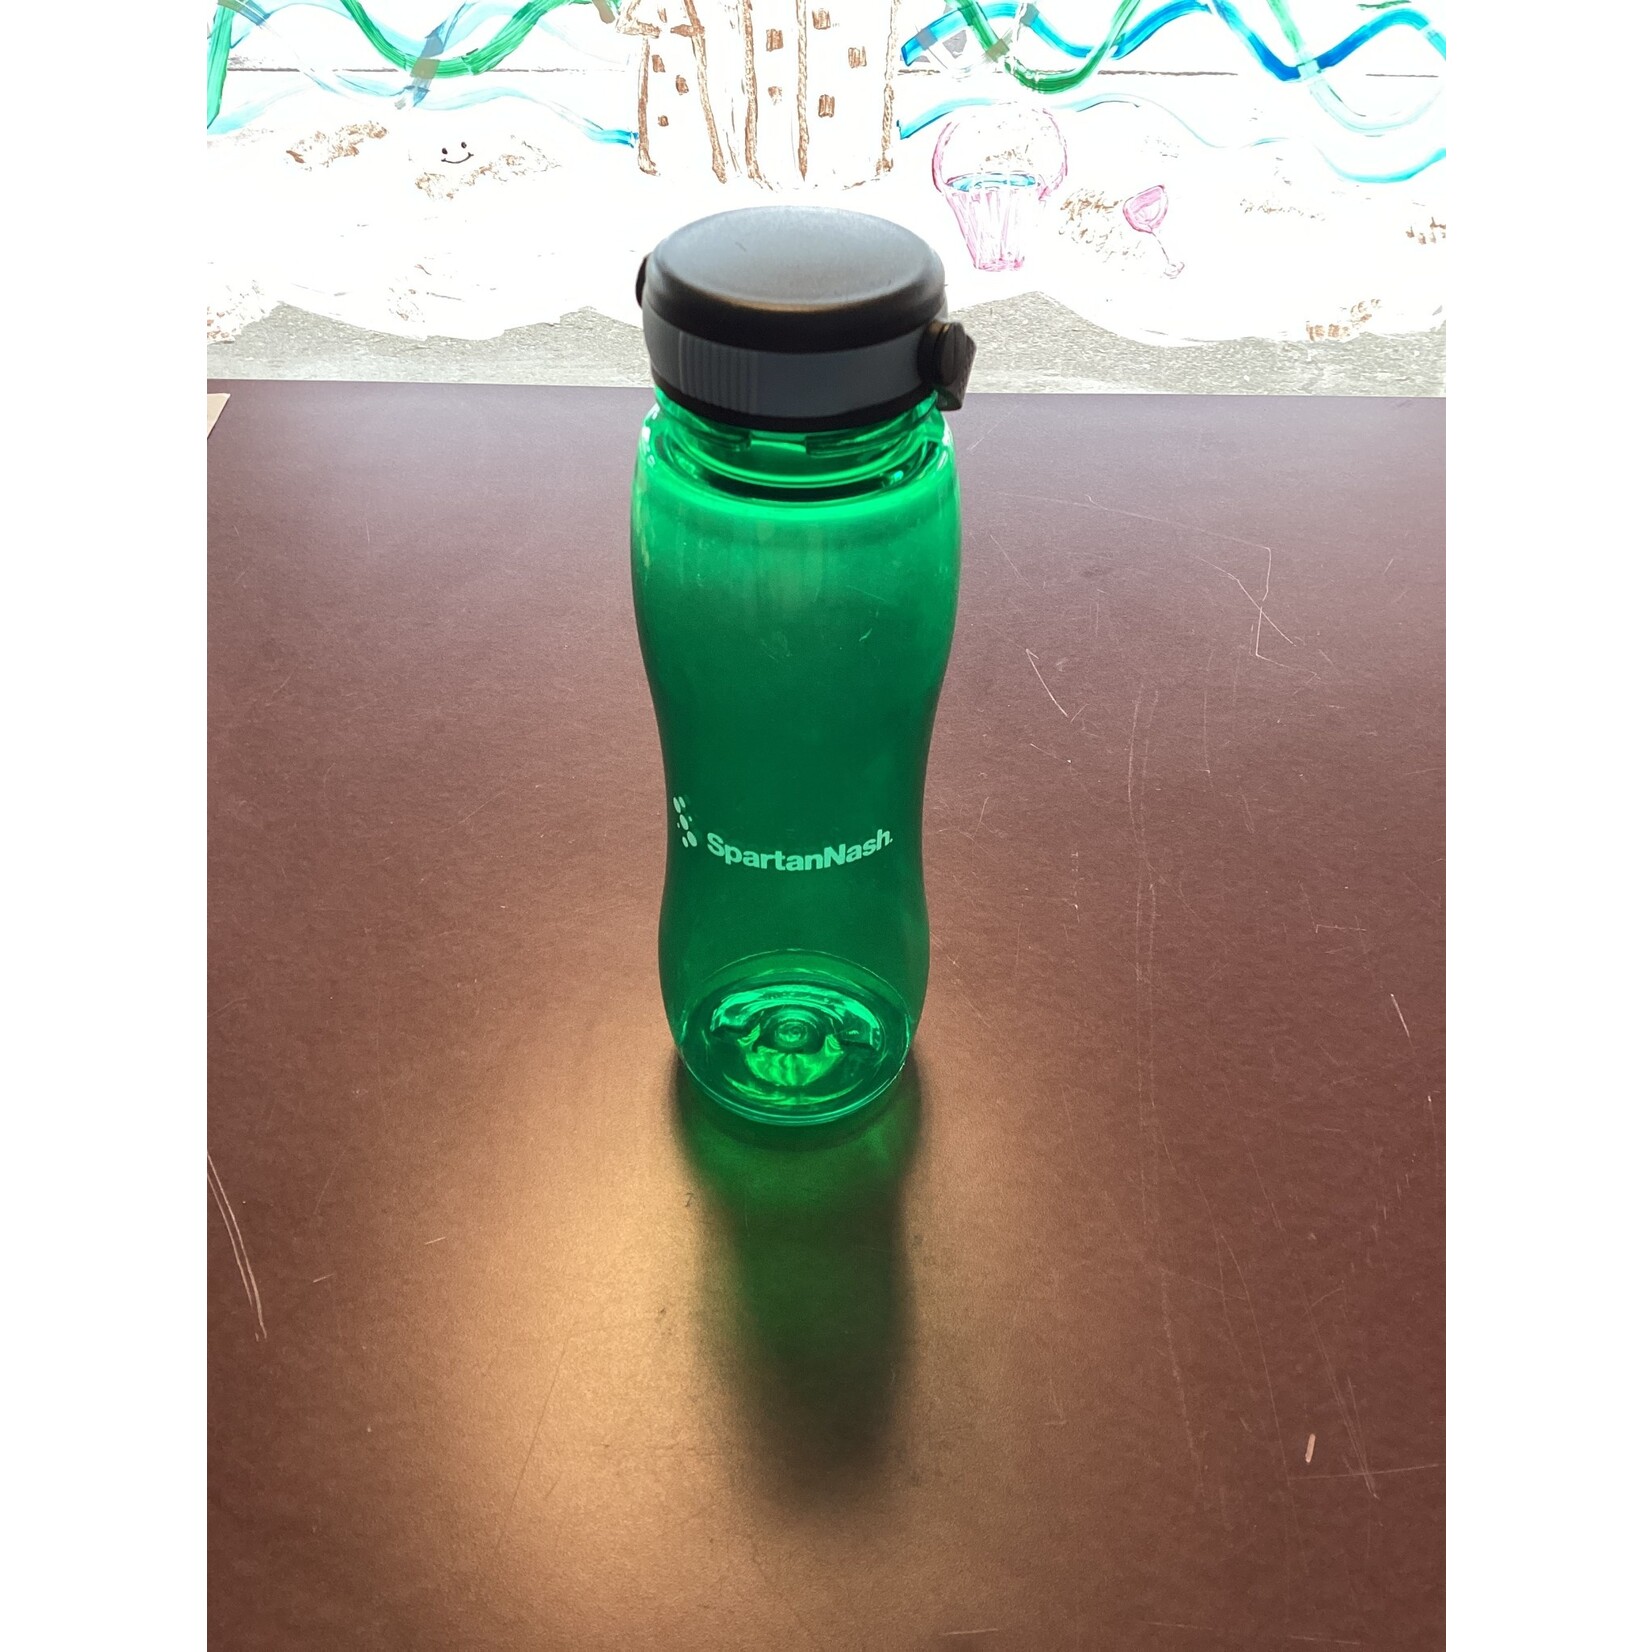 https://cdn.shoplightspeed.com/shops/651743/files/58759134/1652x1652x2/green-plastic-water-bottle.jpg